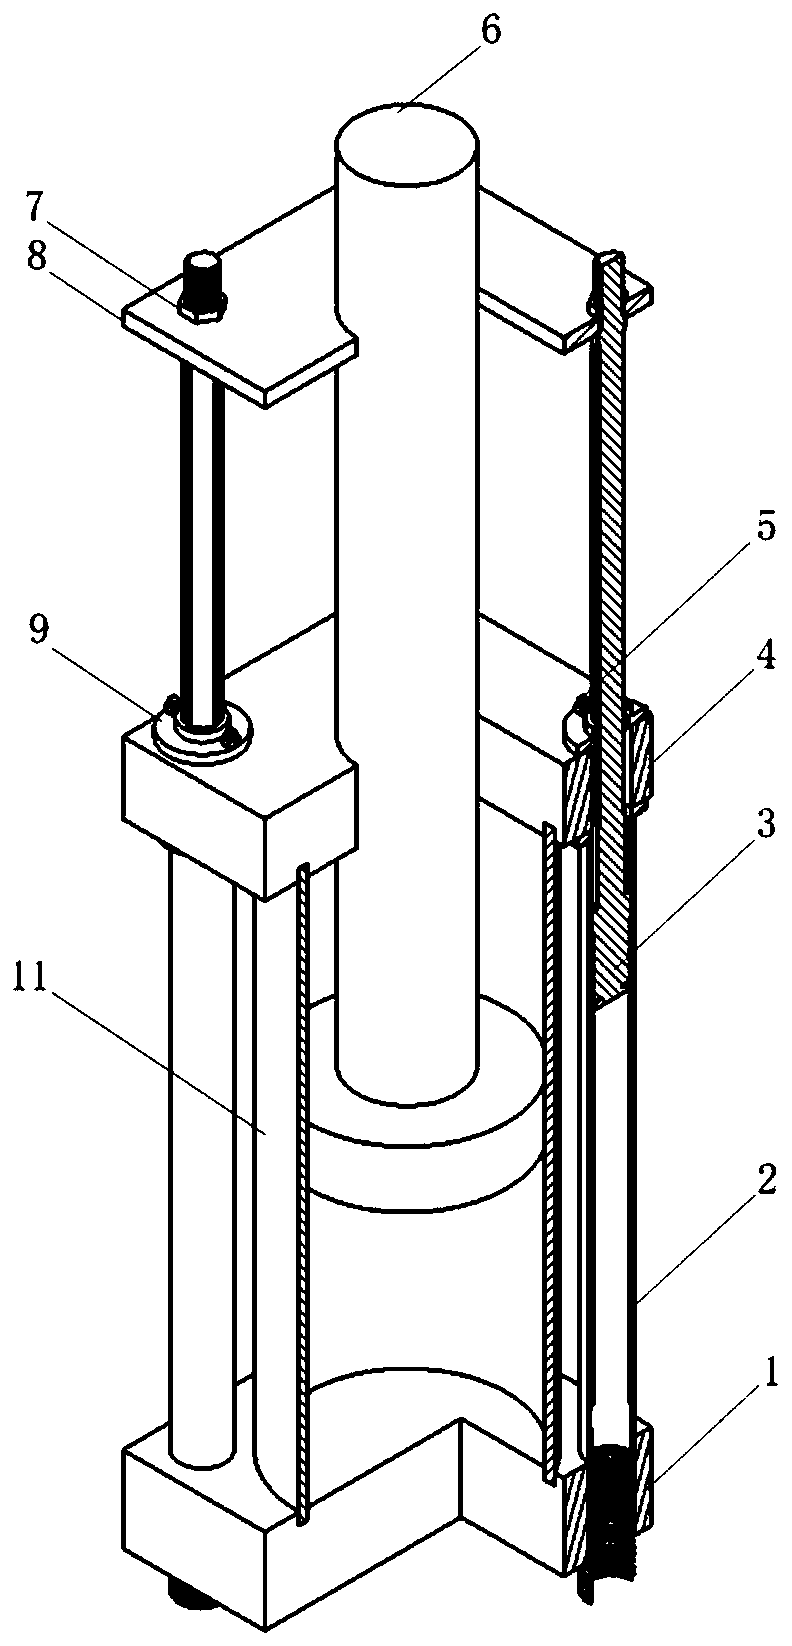 Moving frame type unbalanced load resisting hydraulic cylinder